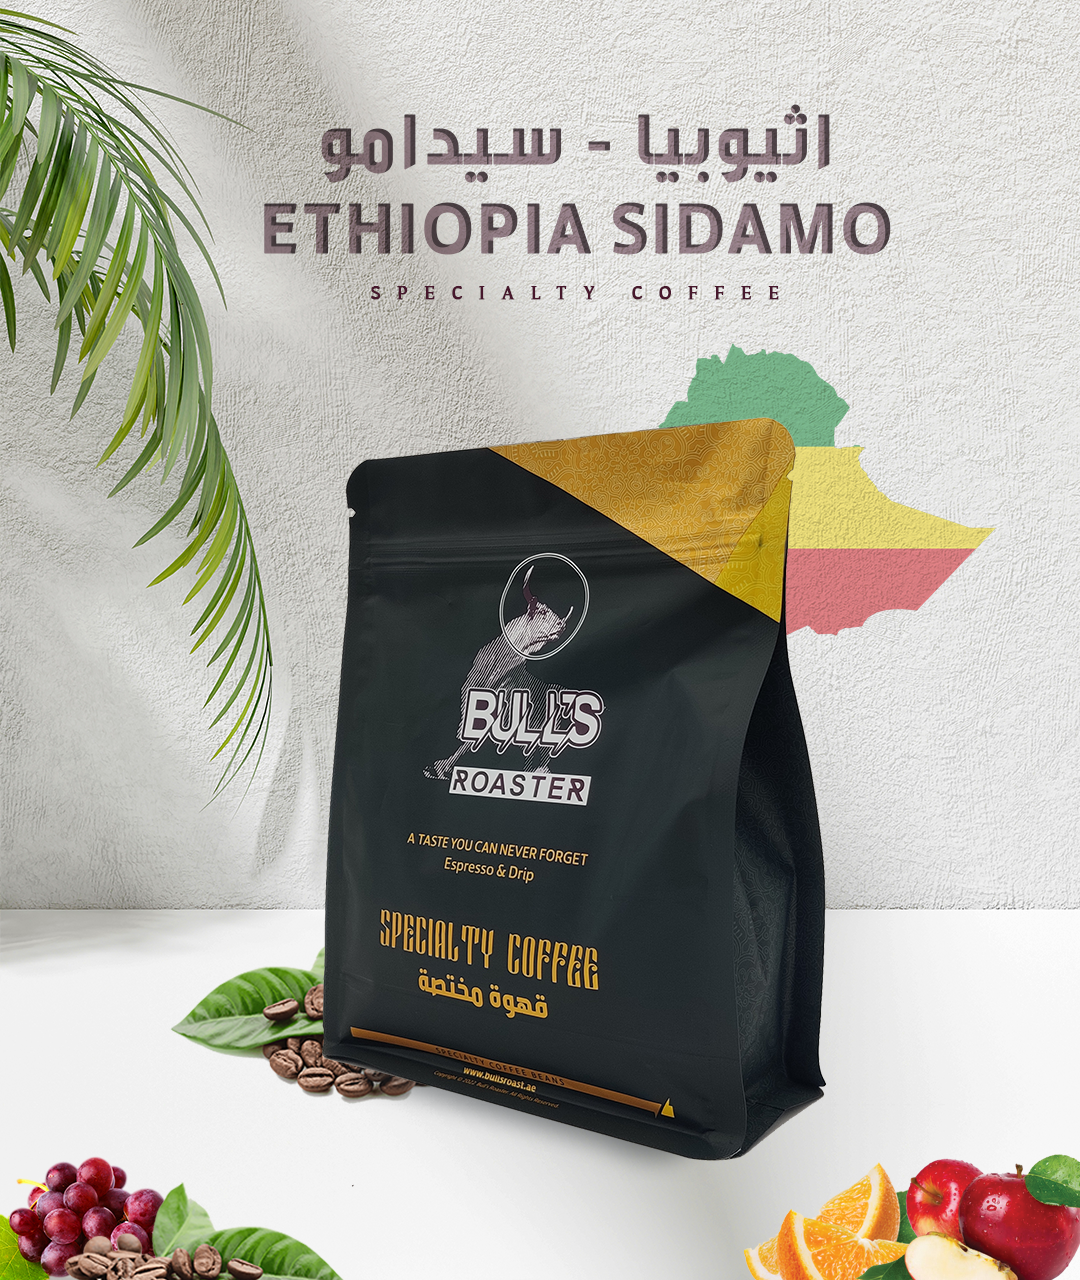 ethiopia sidamo  specialty coffee